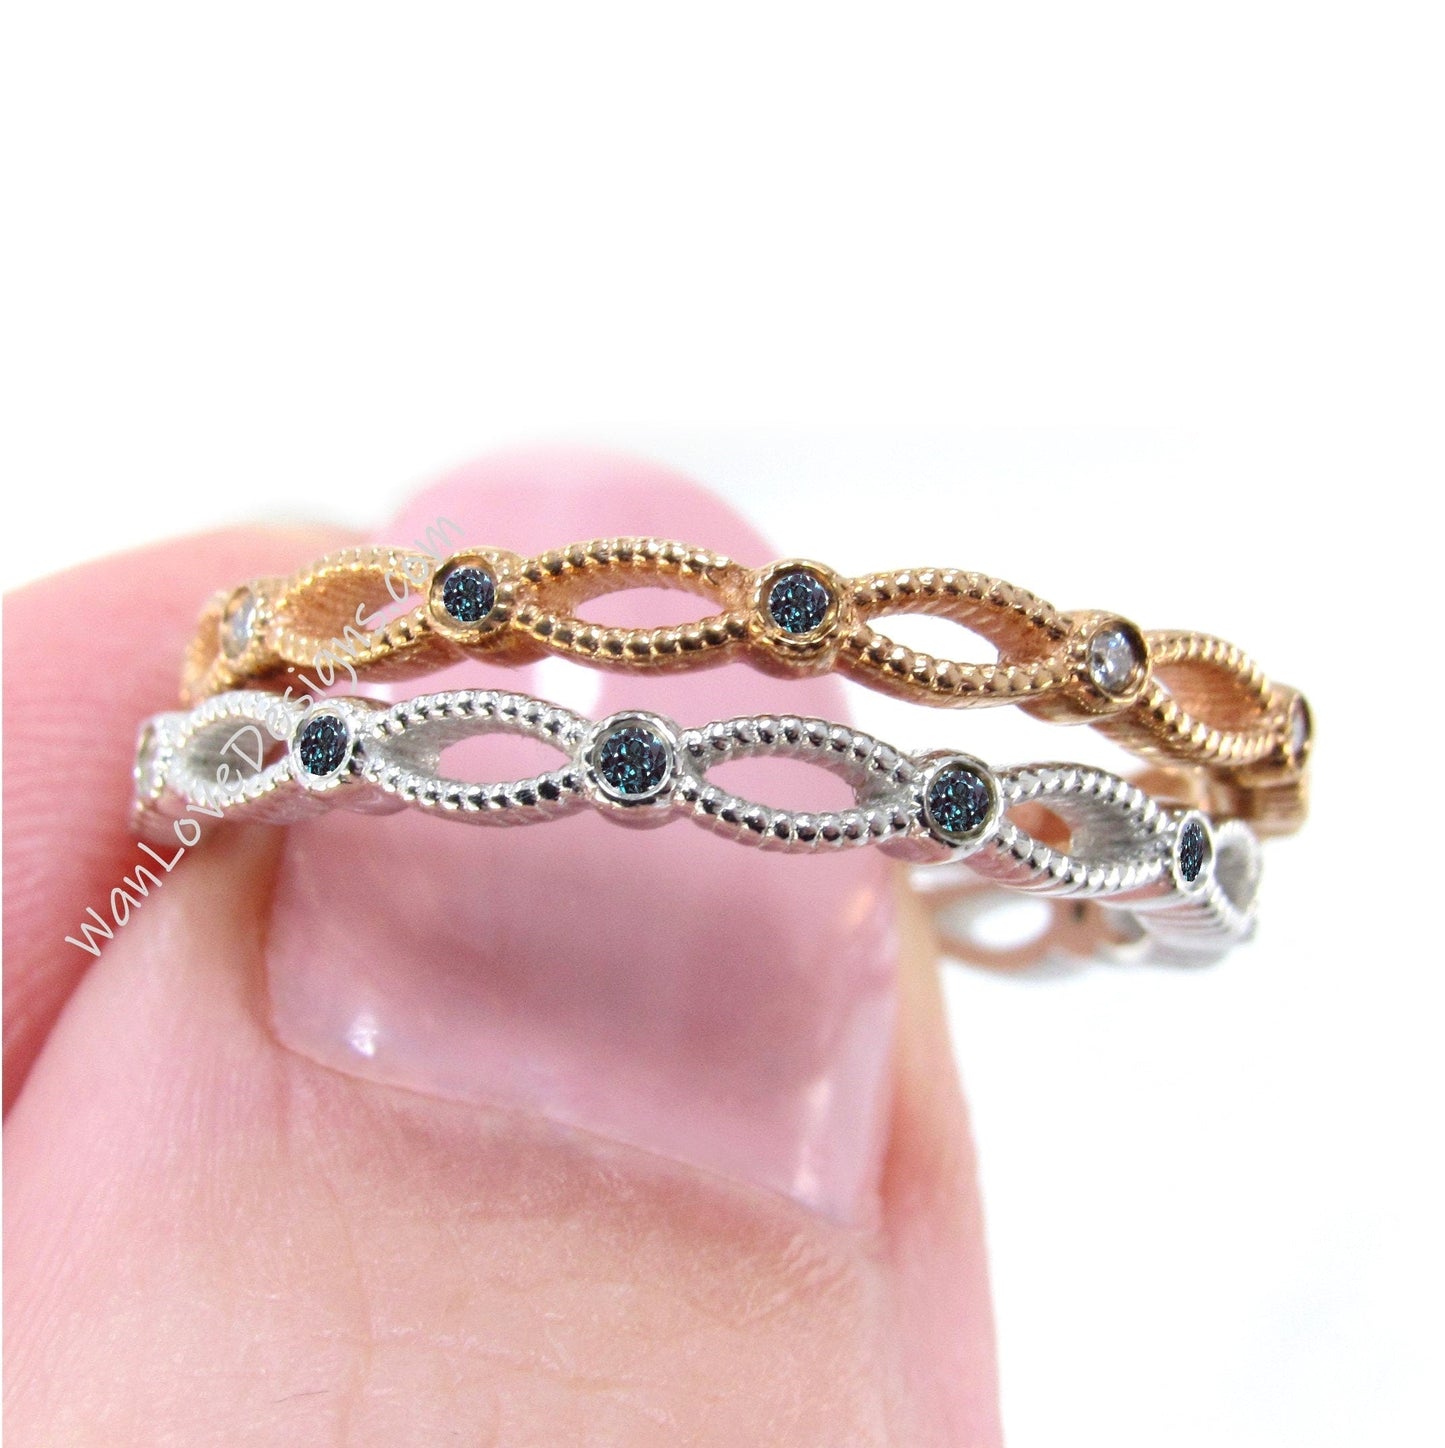 Rope Twist Alexandrite Stack Rings/ Dainty Diamond Textured Bands/ 18K Solid Gold Bridal Rings/ Elegant Women Rings/ Minimalist Ring For Her Wan Love Designs